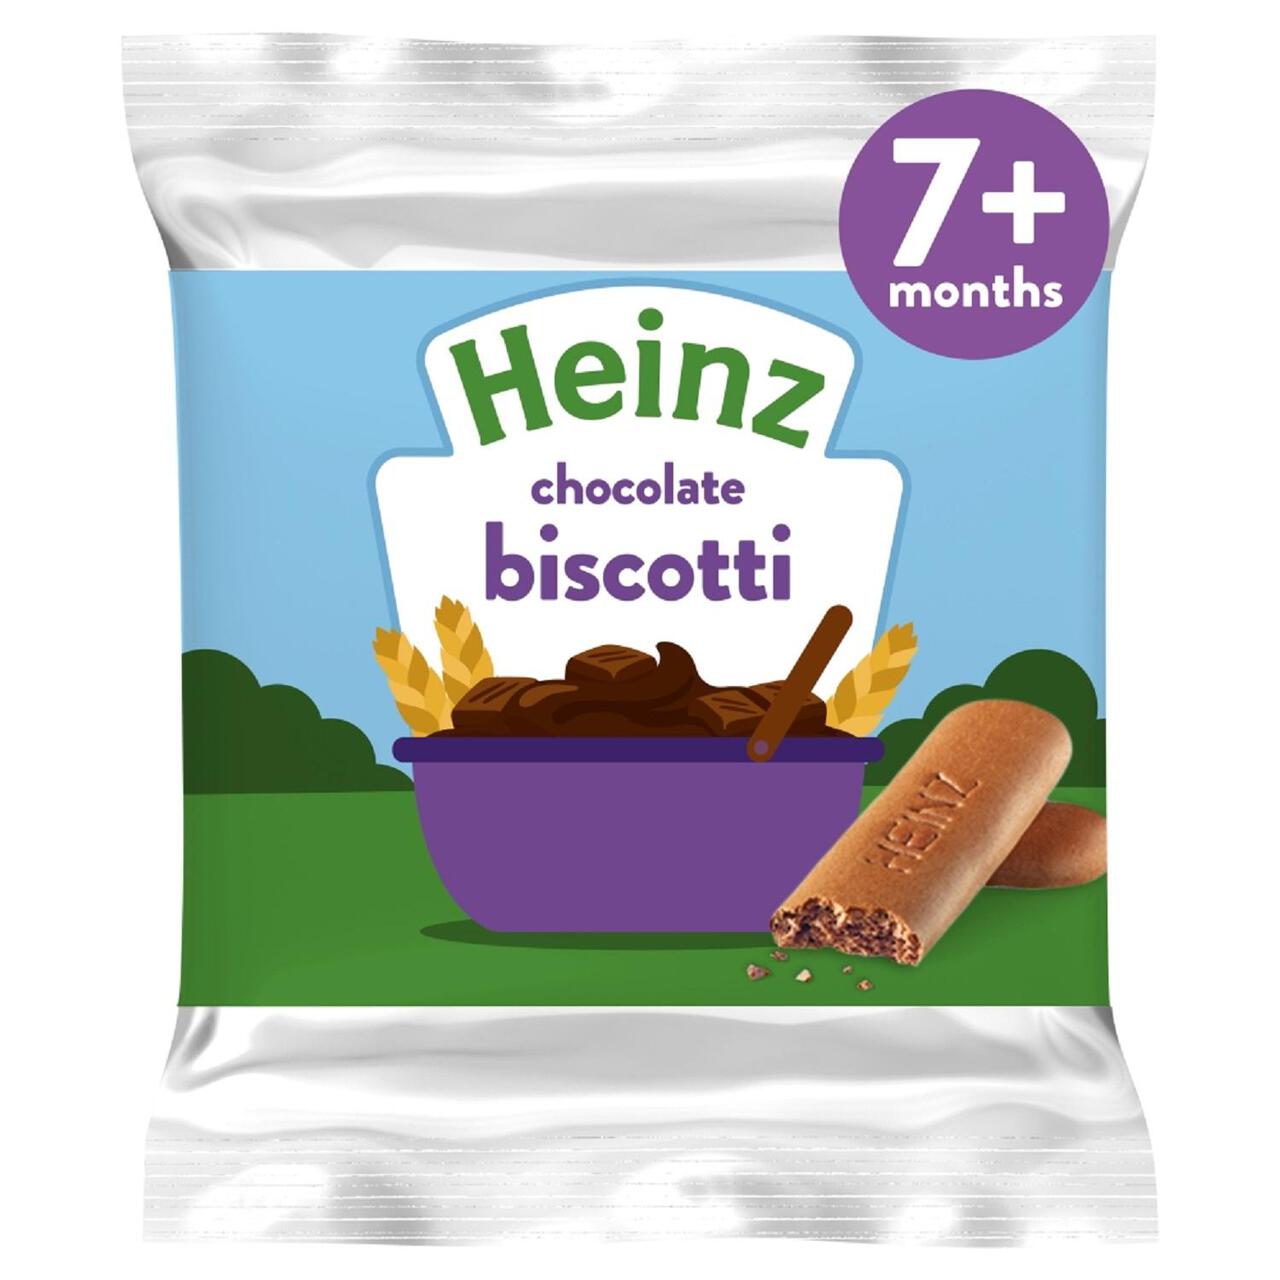 Heinz So Yummy Chocolate Biscotti Baby Food Snacks 7+ Months 60g